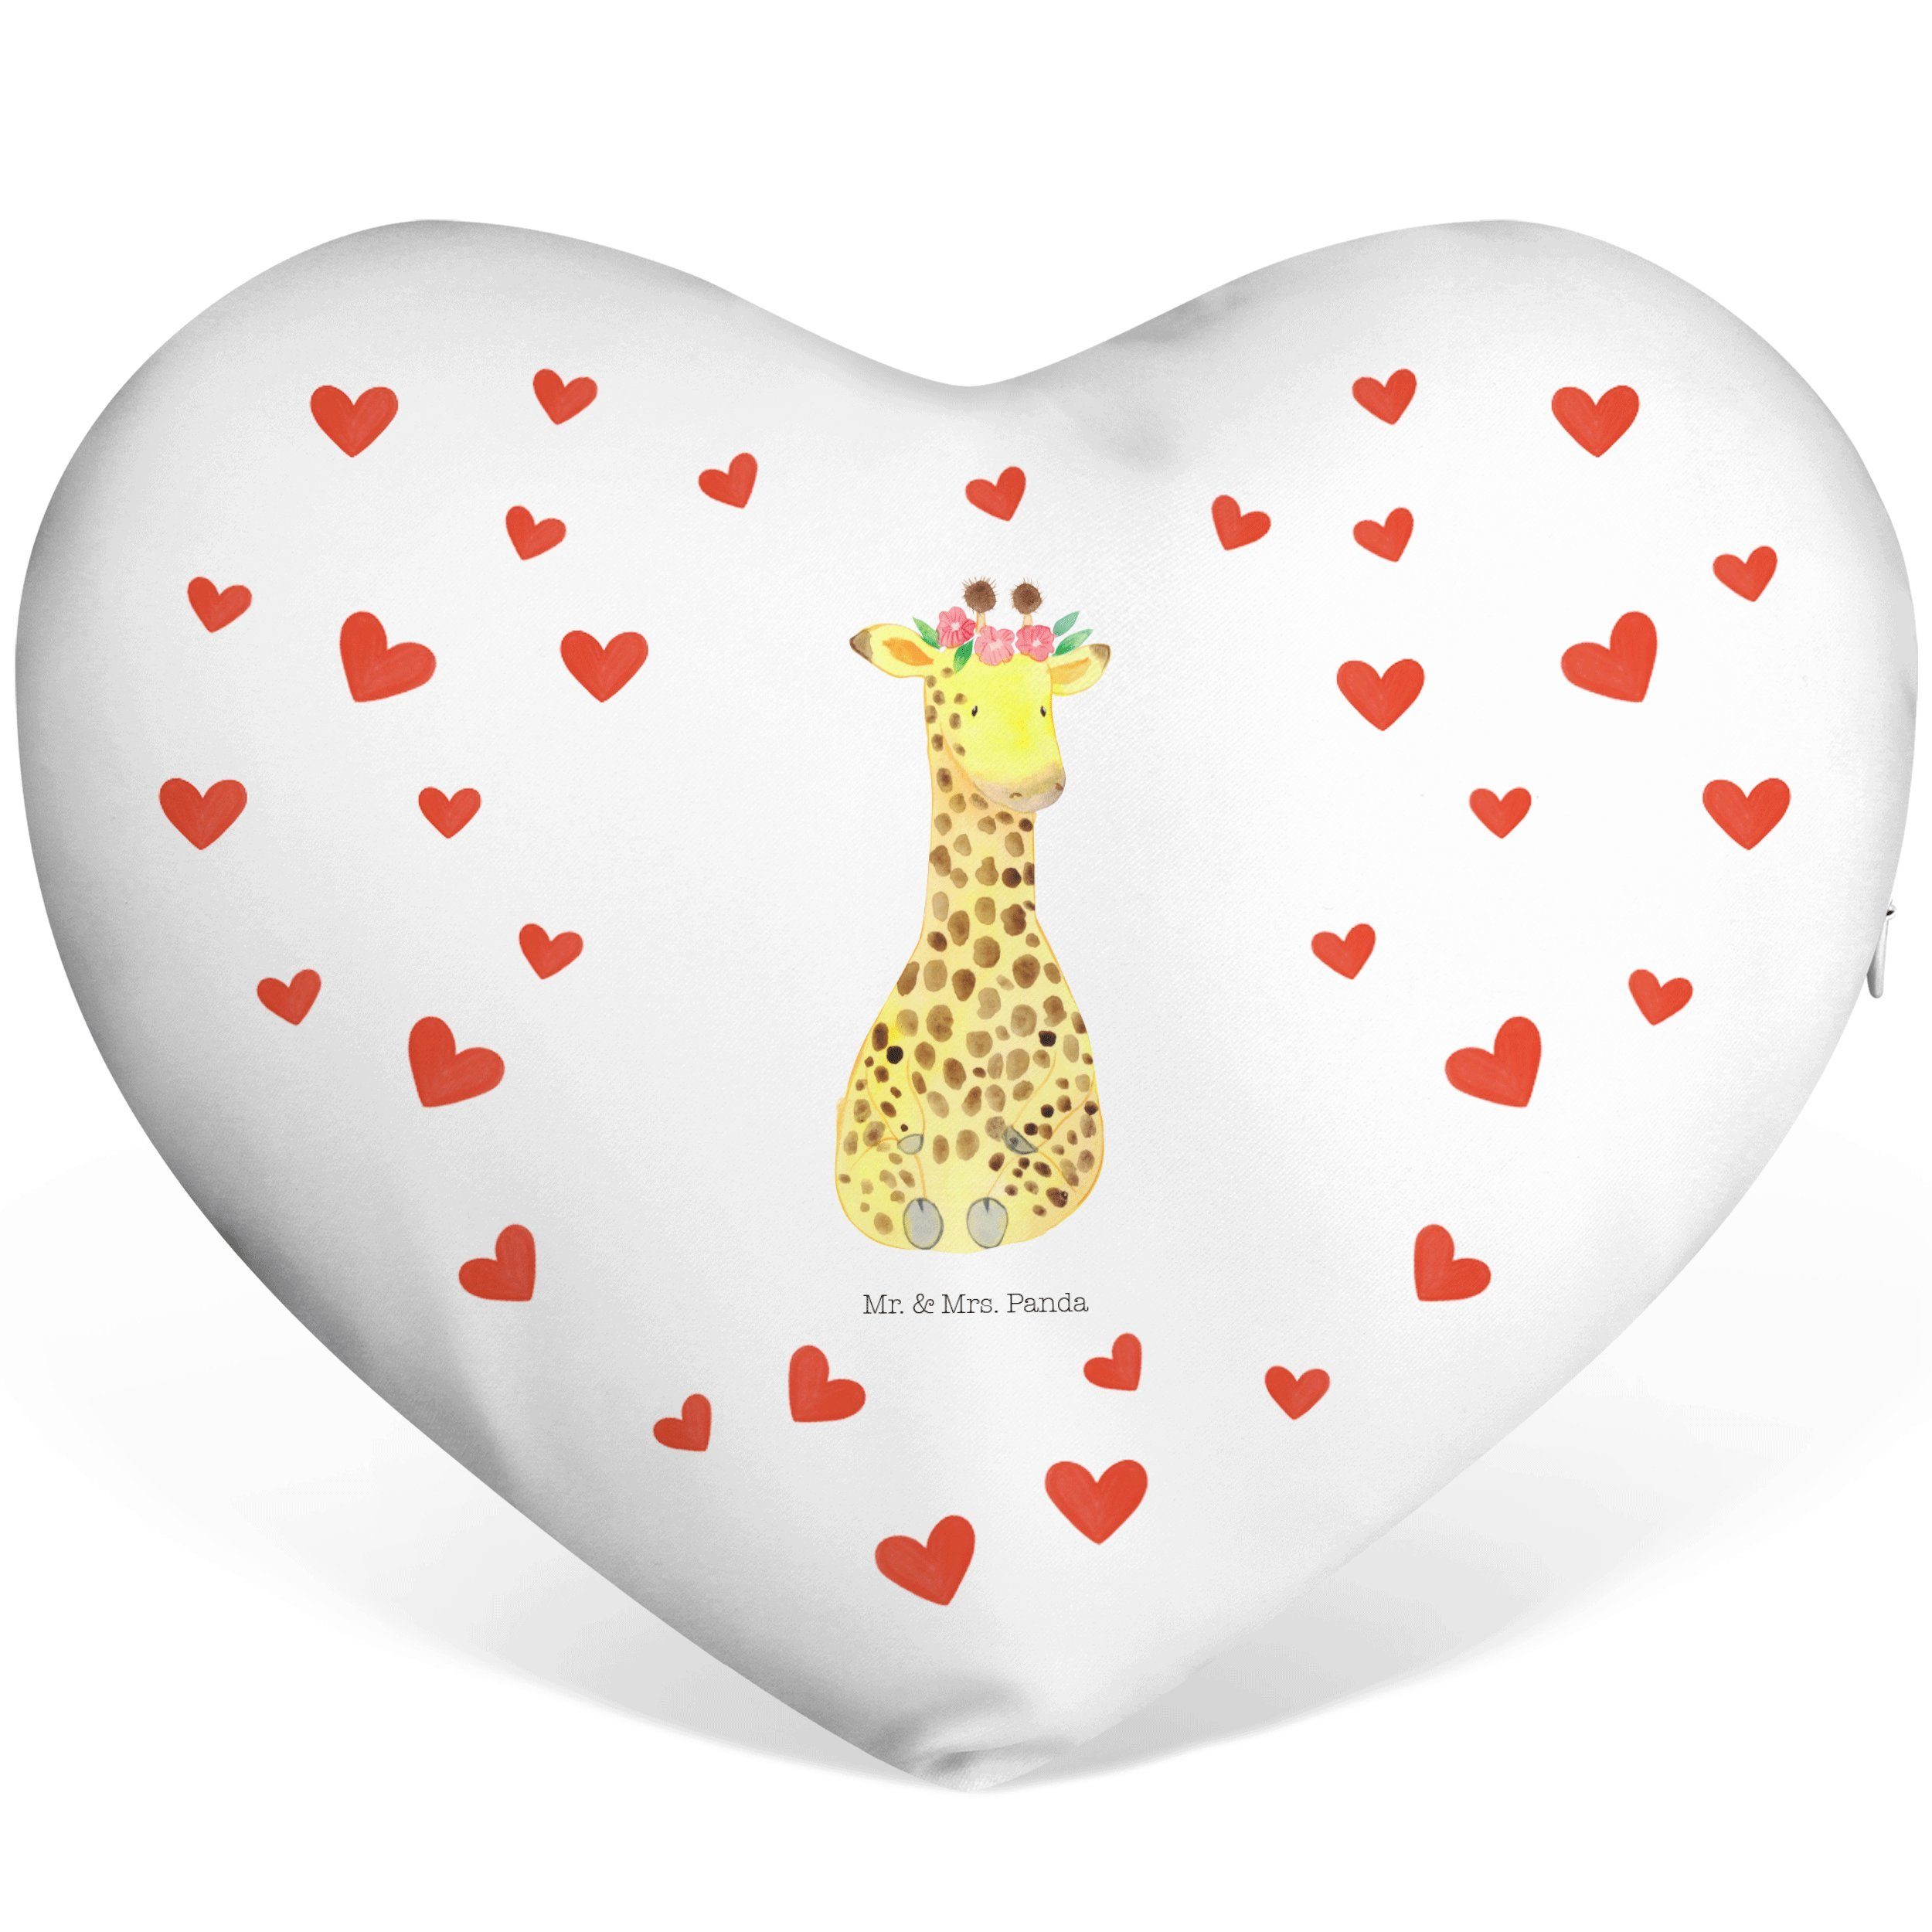 Mr. & Mrs. Panda Dekokissen Giraffe Blumenkranz - Weiß - Geschenk, Wildtiere, Afrika, Herz, Selbs